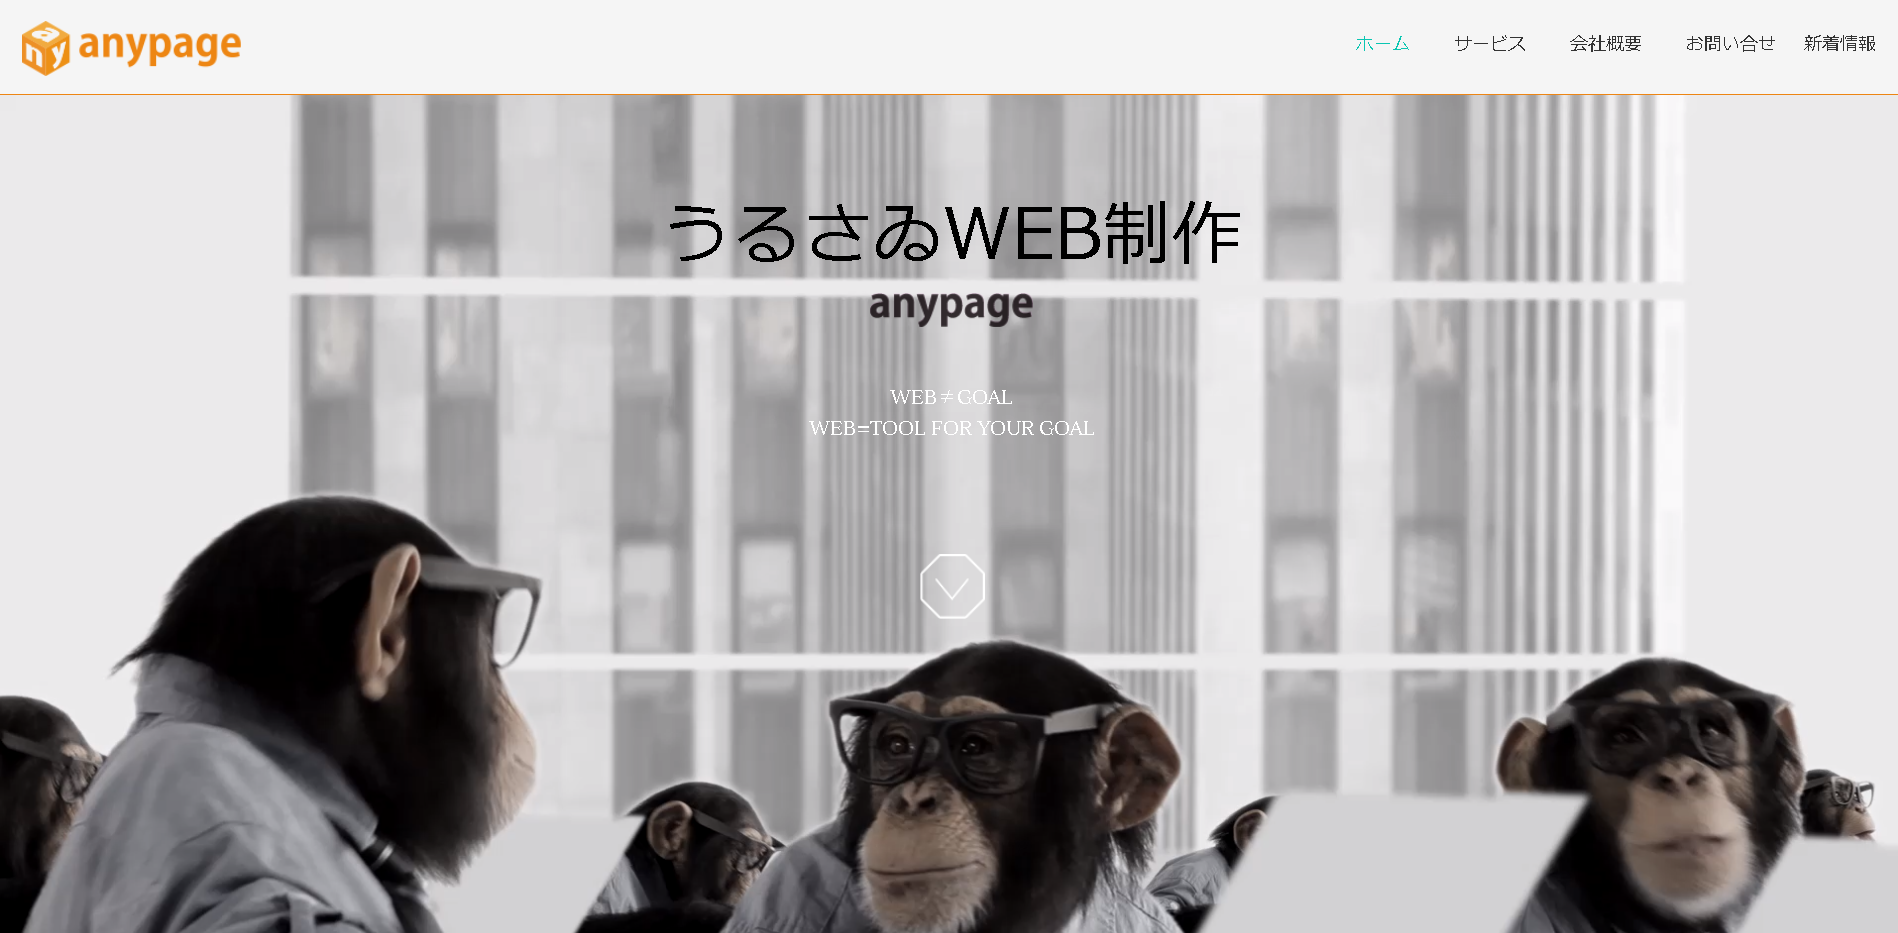 anypage株式会社のanypageサービス